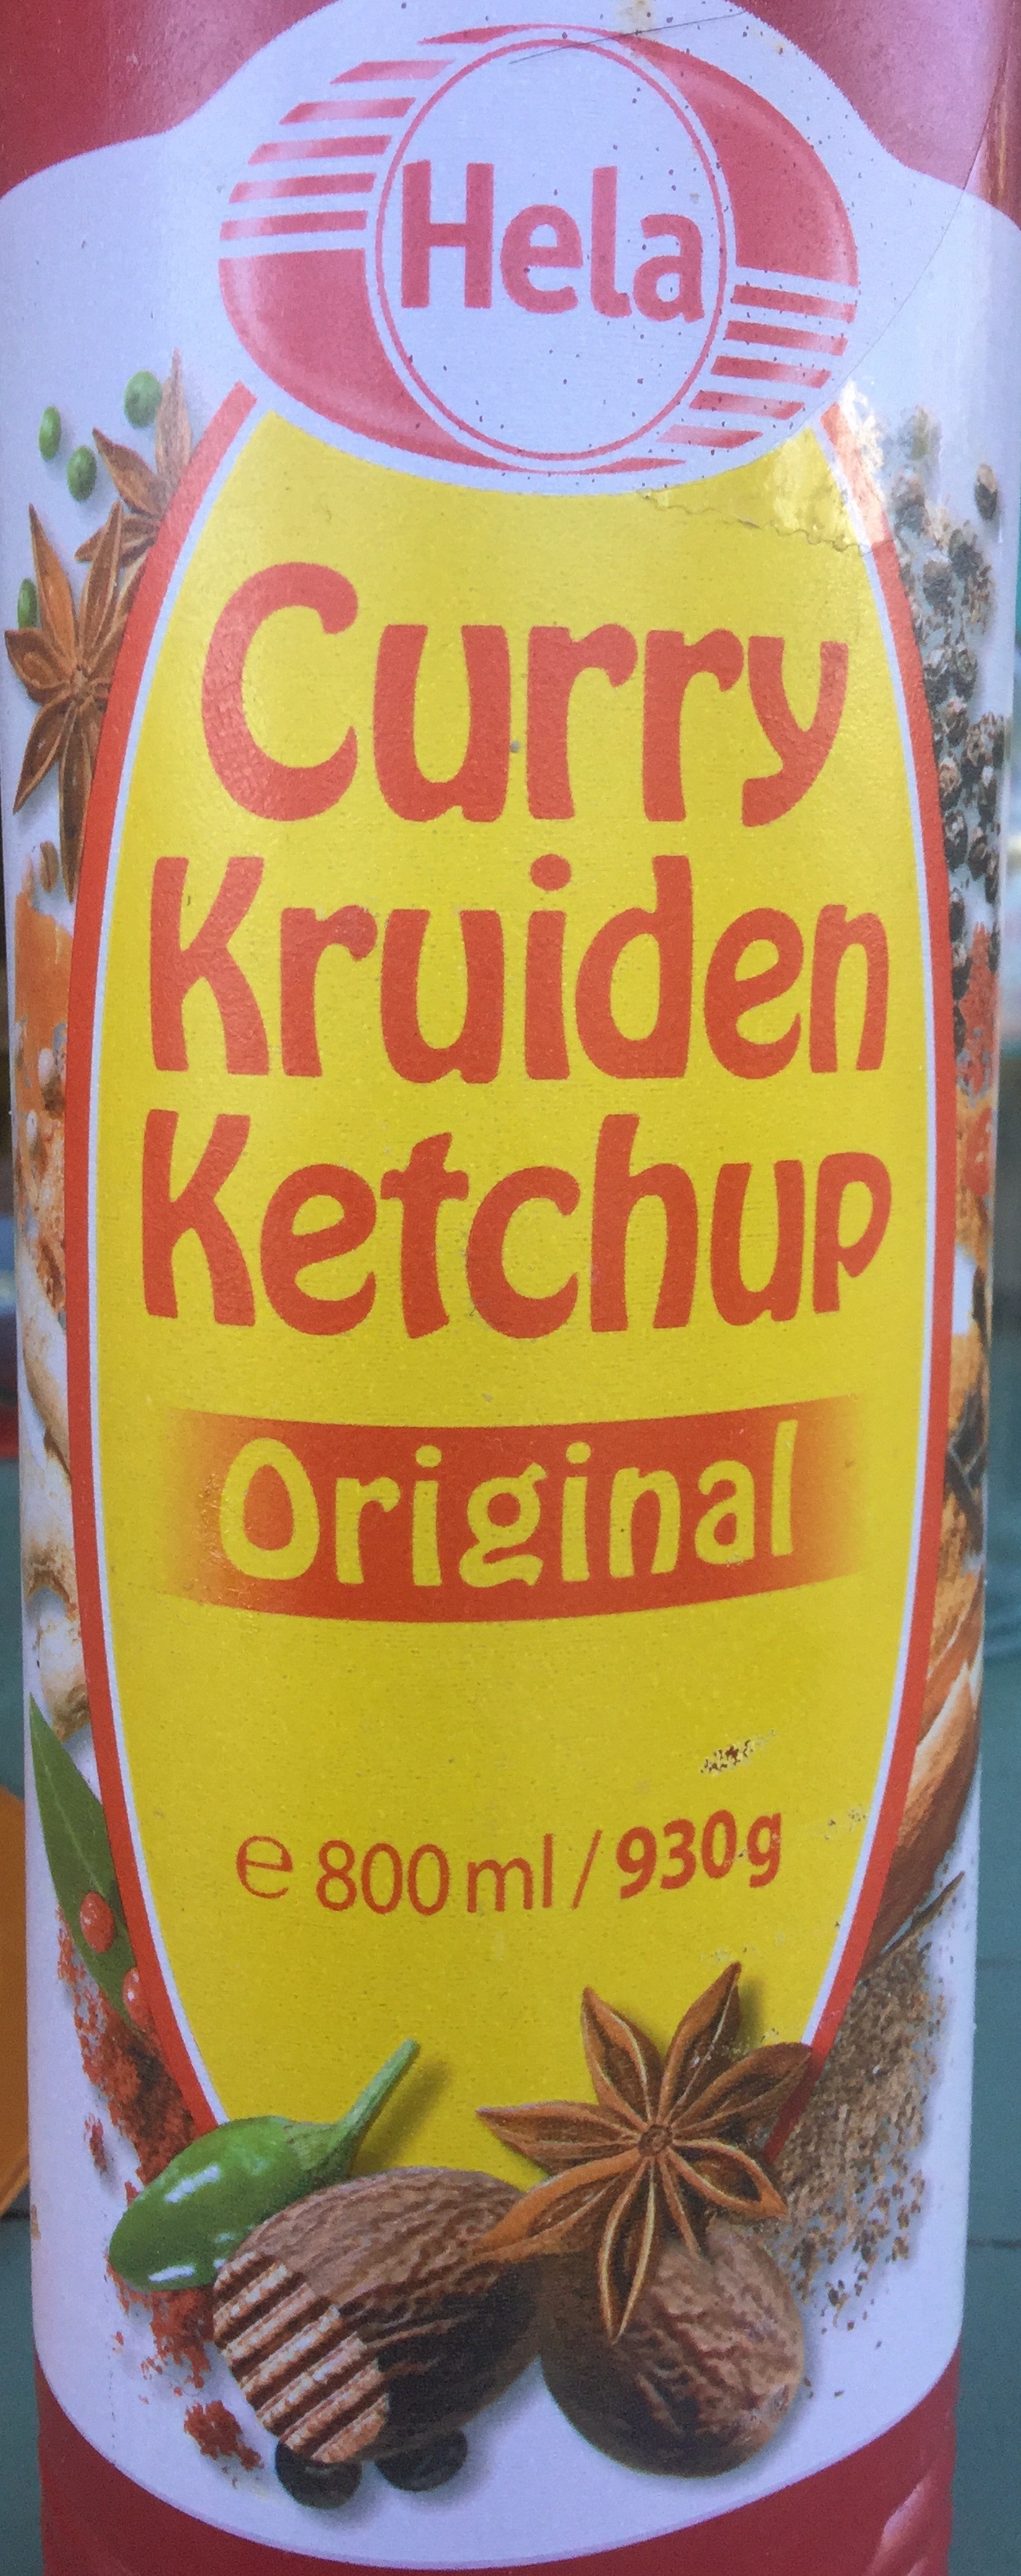 Curry Kruiden Ketchup Original - Product - nl